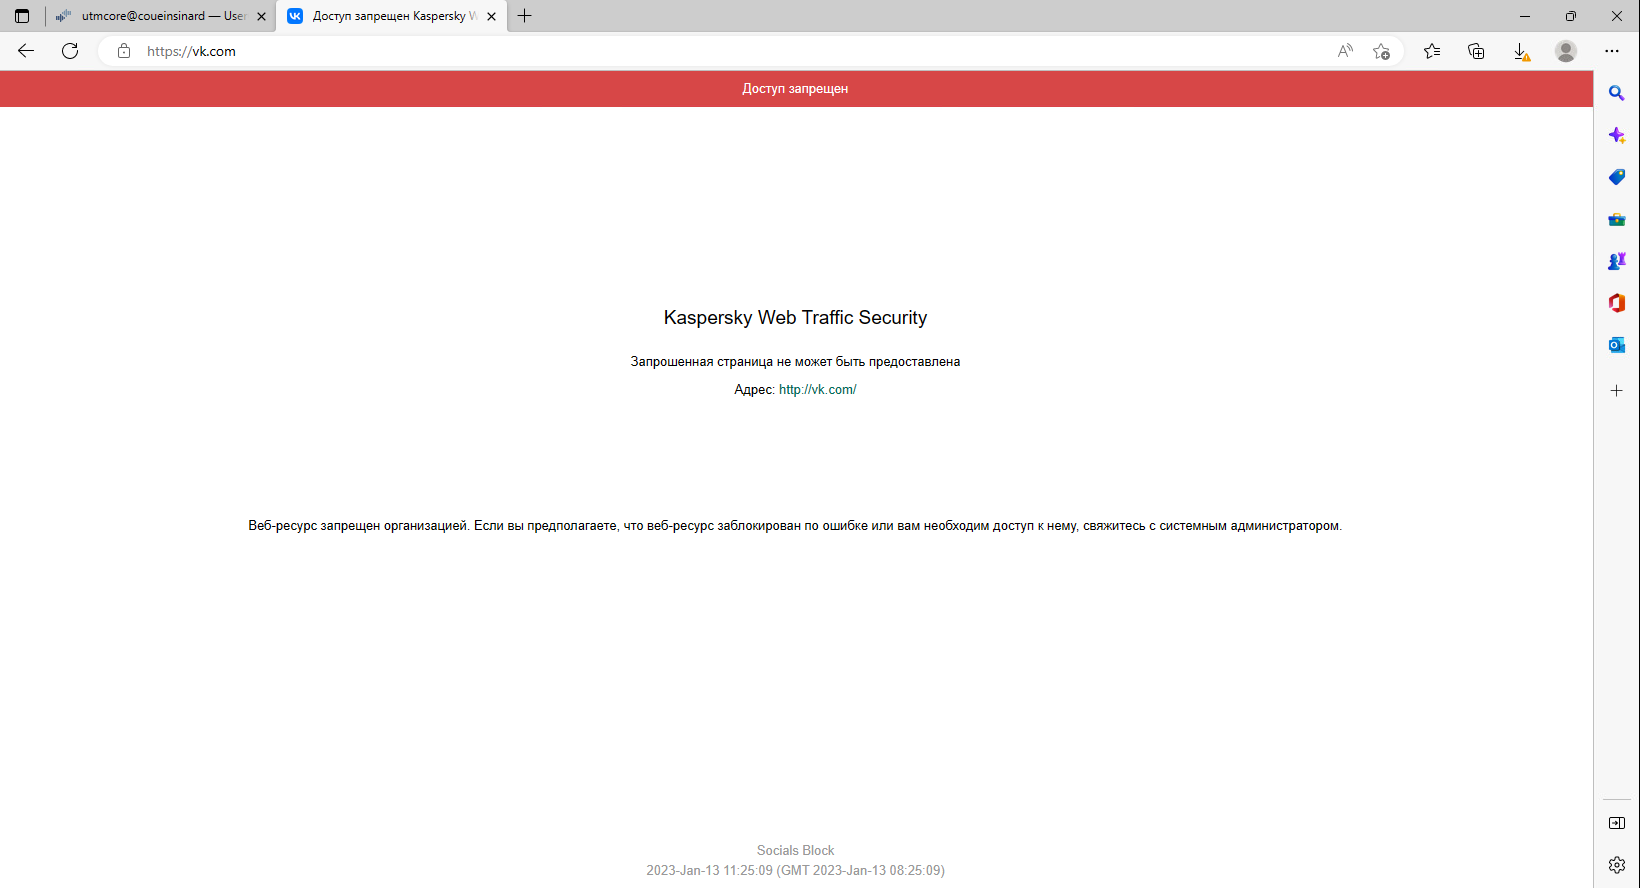 Web traffic security